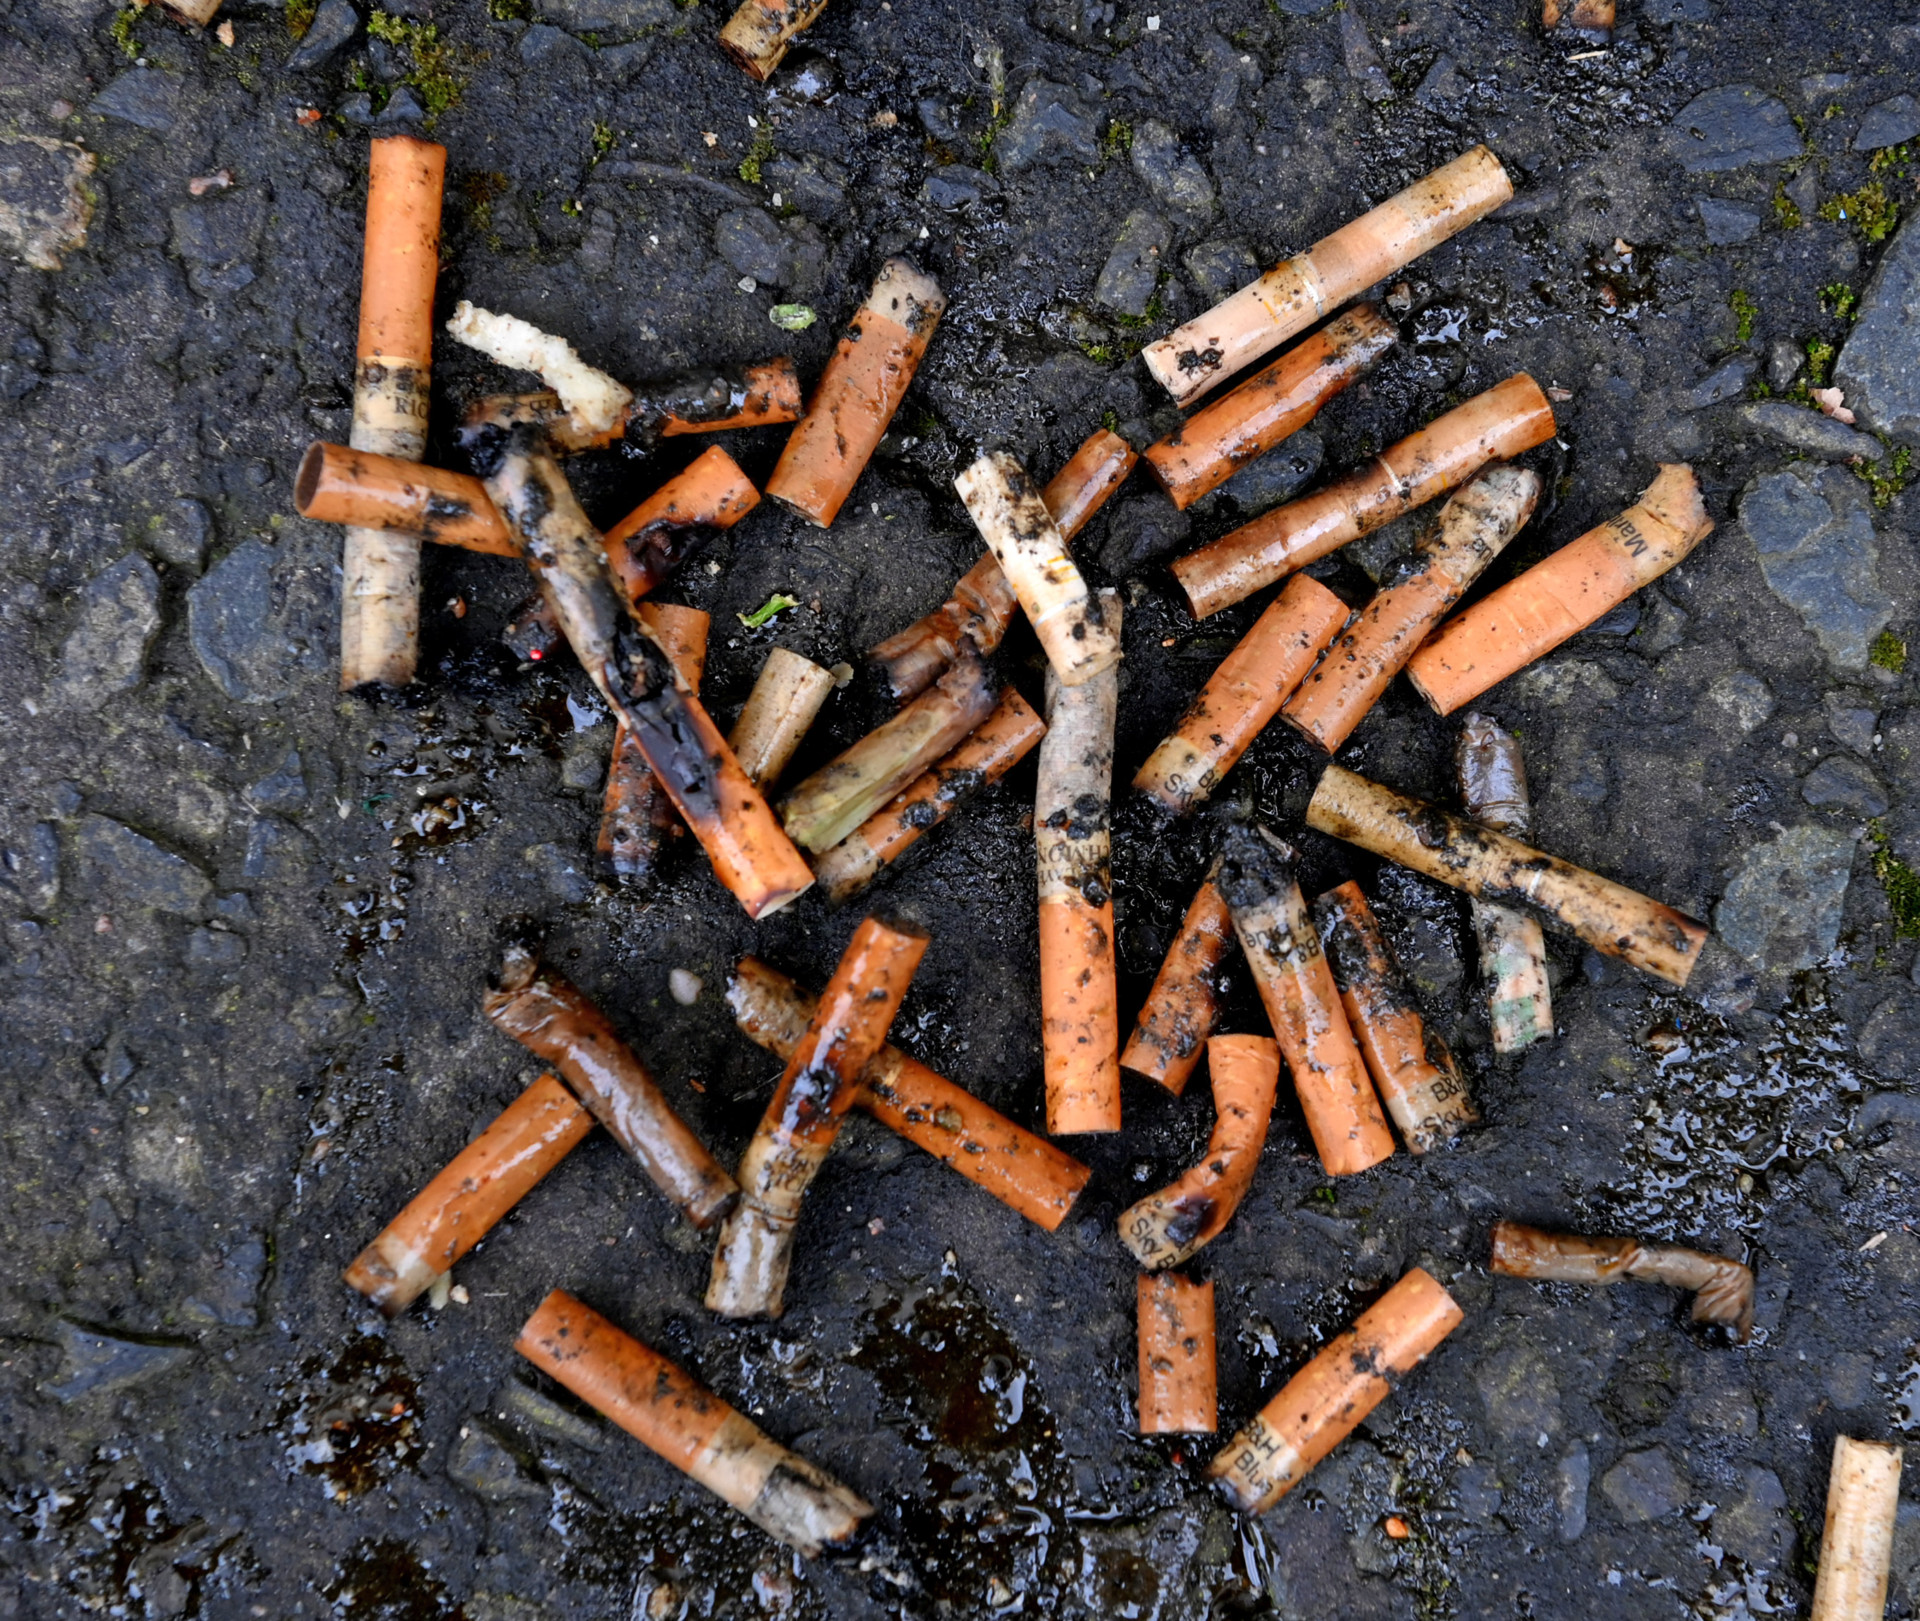 Smokers hit hardest in new anti-littering scheme